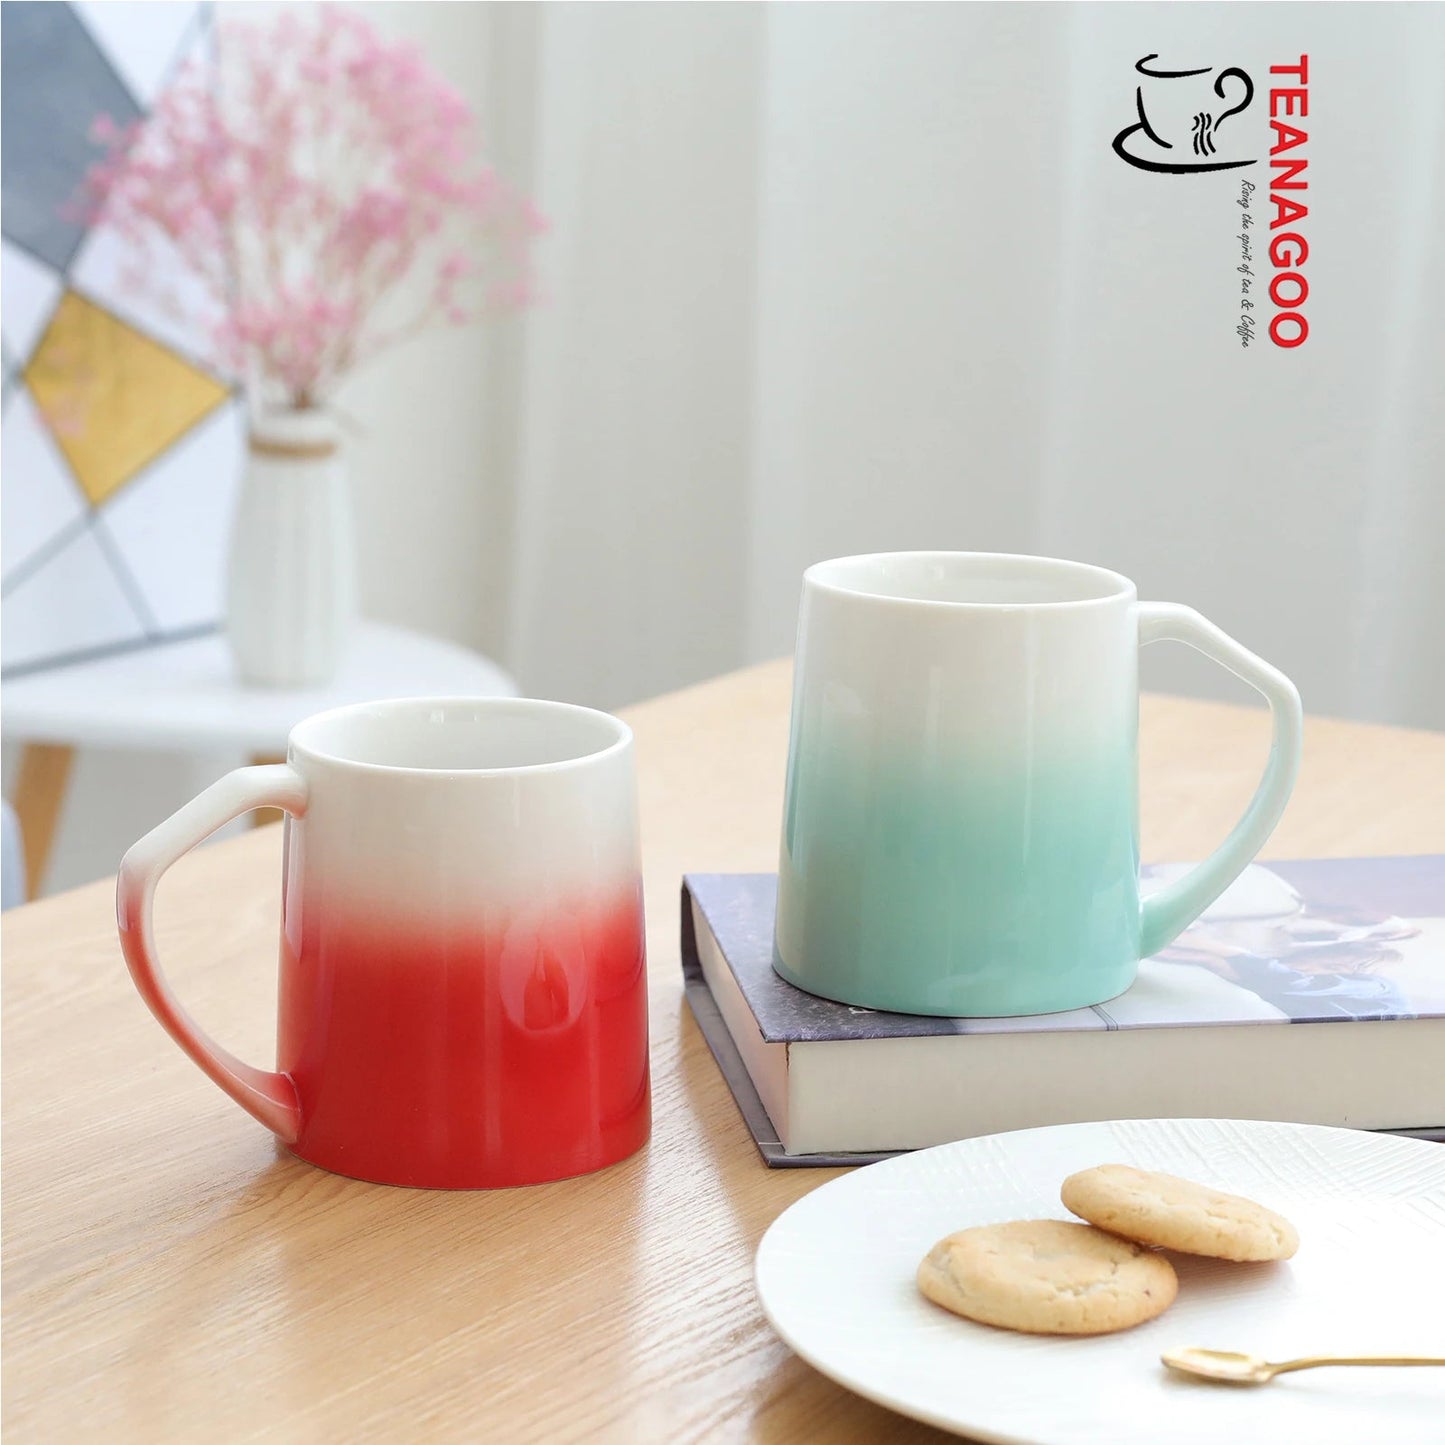 Porcelain Coffee Mugs Set Of 6, 16 Ounce, Warm & Cold Color Assortment